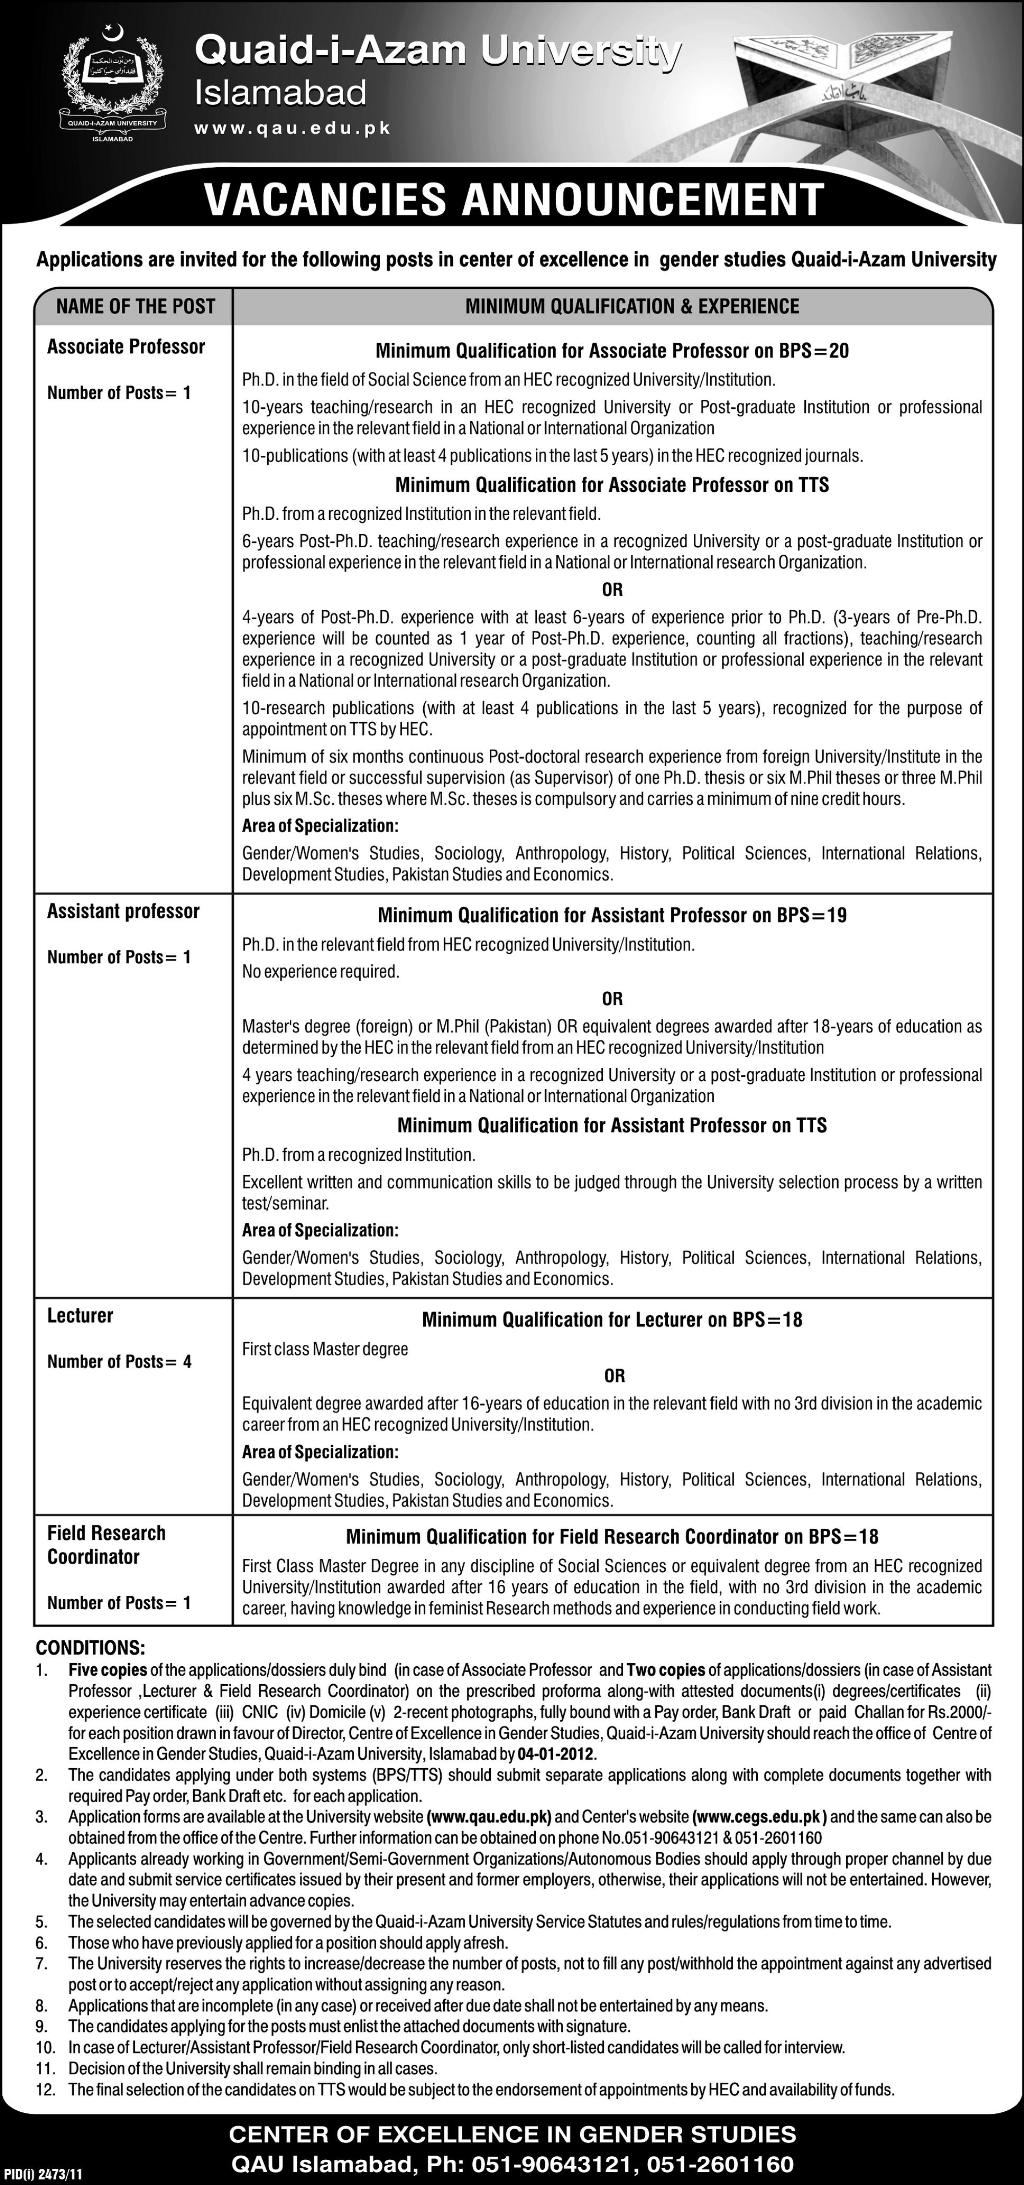 Quaid-i-Azam University Islamabad Jobs Opportunity